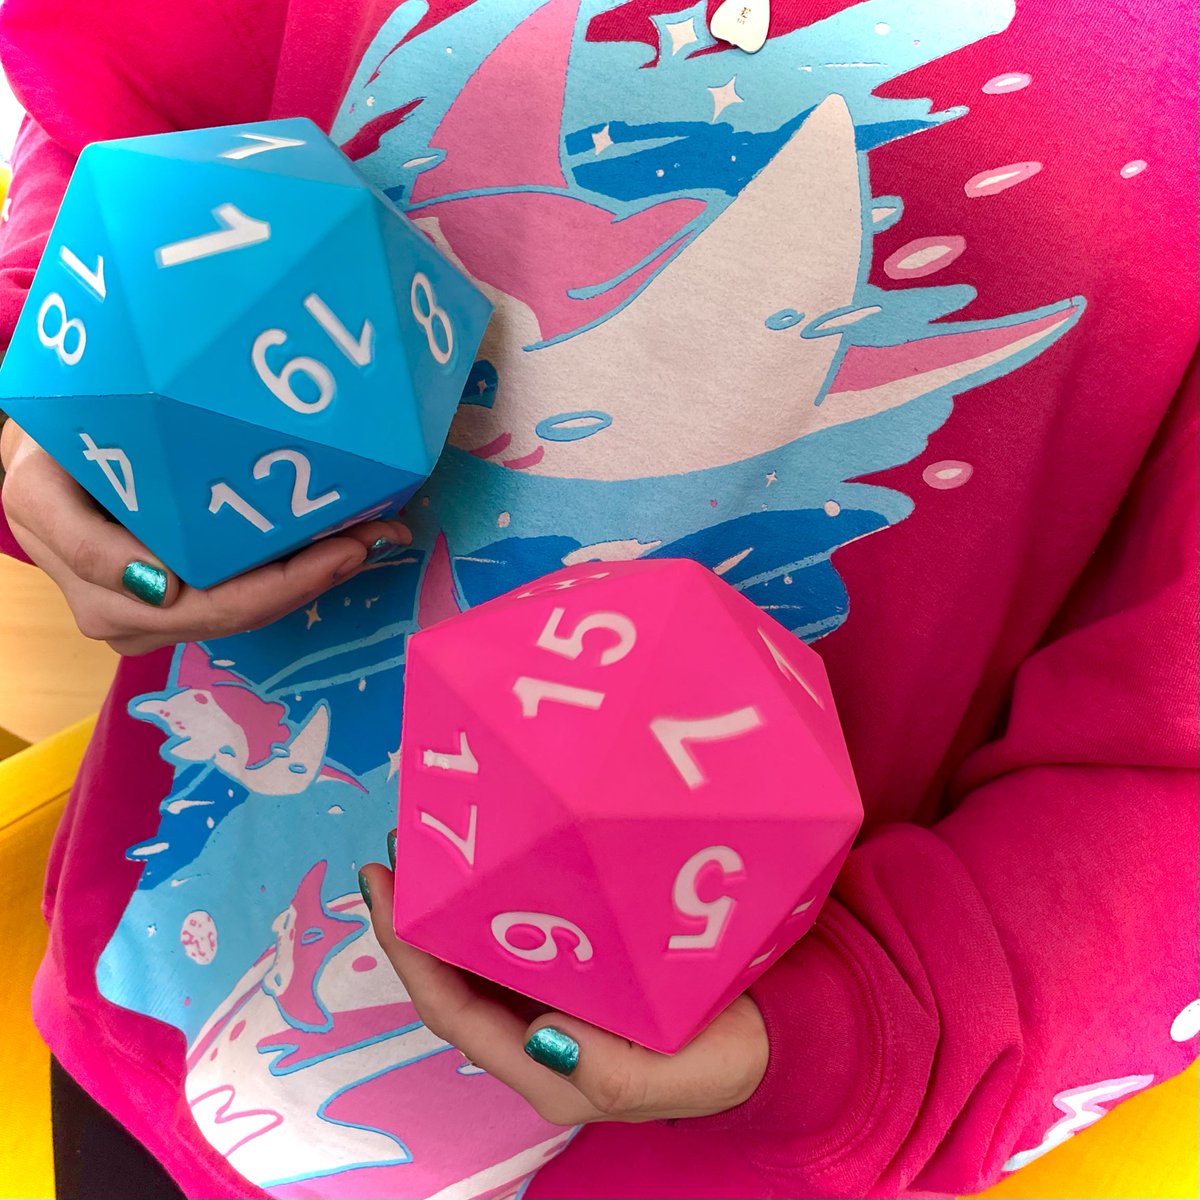 We believe in giant dice supremacy 🎲👑 

#dice #ttrpg #d20 #foamdice #colors #Kessentertainment #kessent #giantdice #luckydice #dnddice #oversizeddice #foamdice #geekygifts #nerdygifts